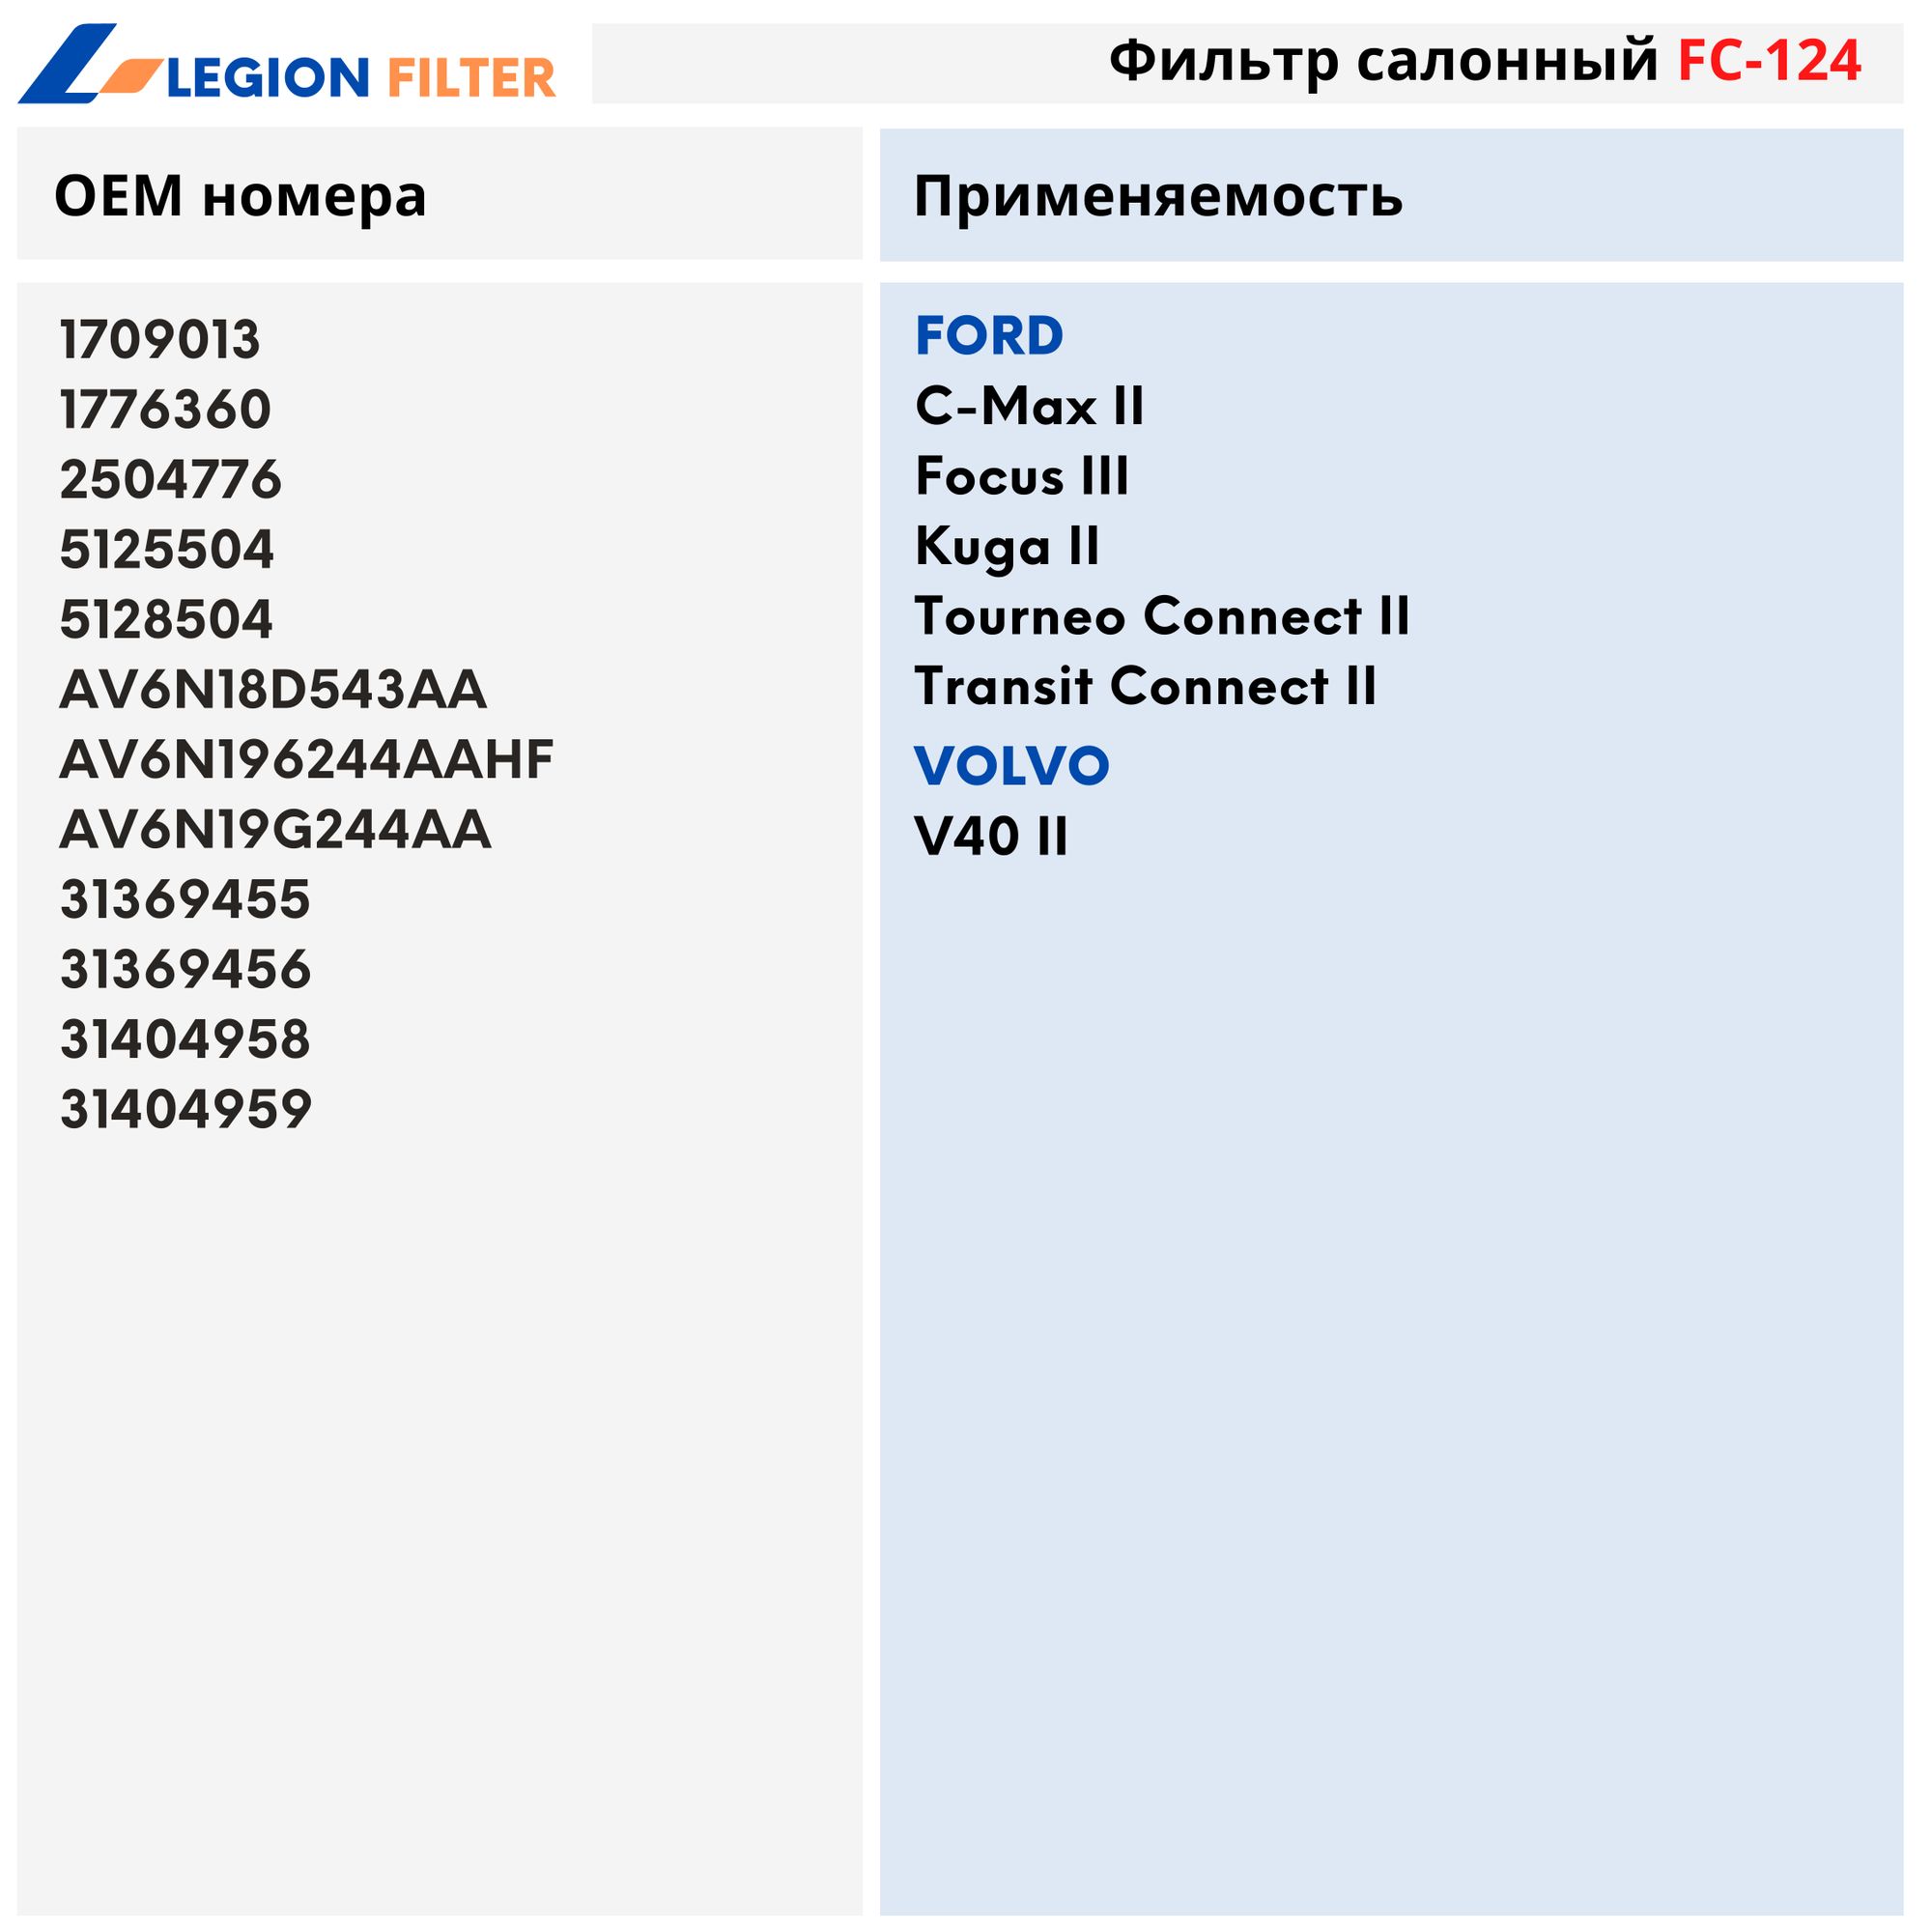 Фильтр салонный FORD/VOLVO (OEM:5128504) fc124 Legion